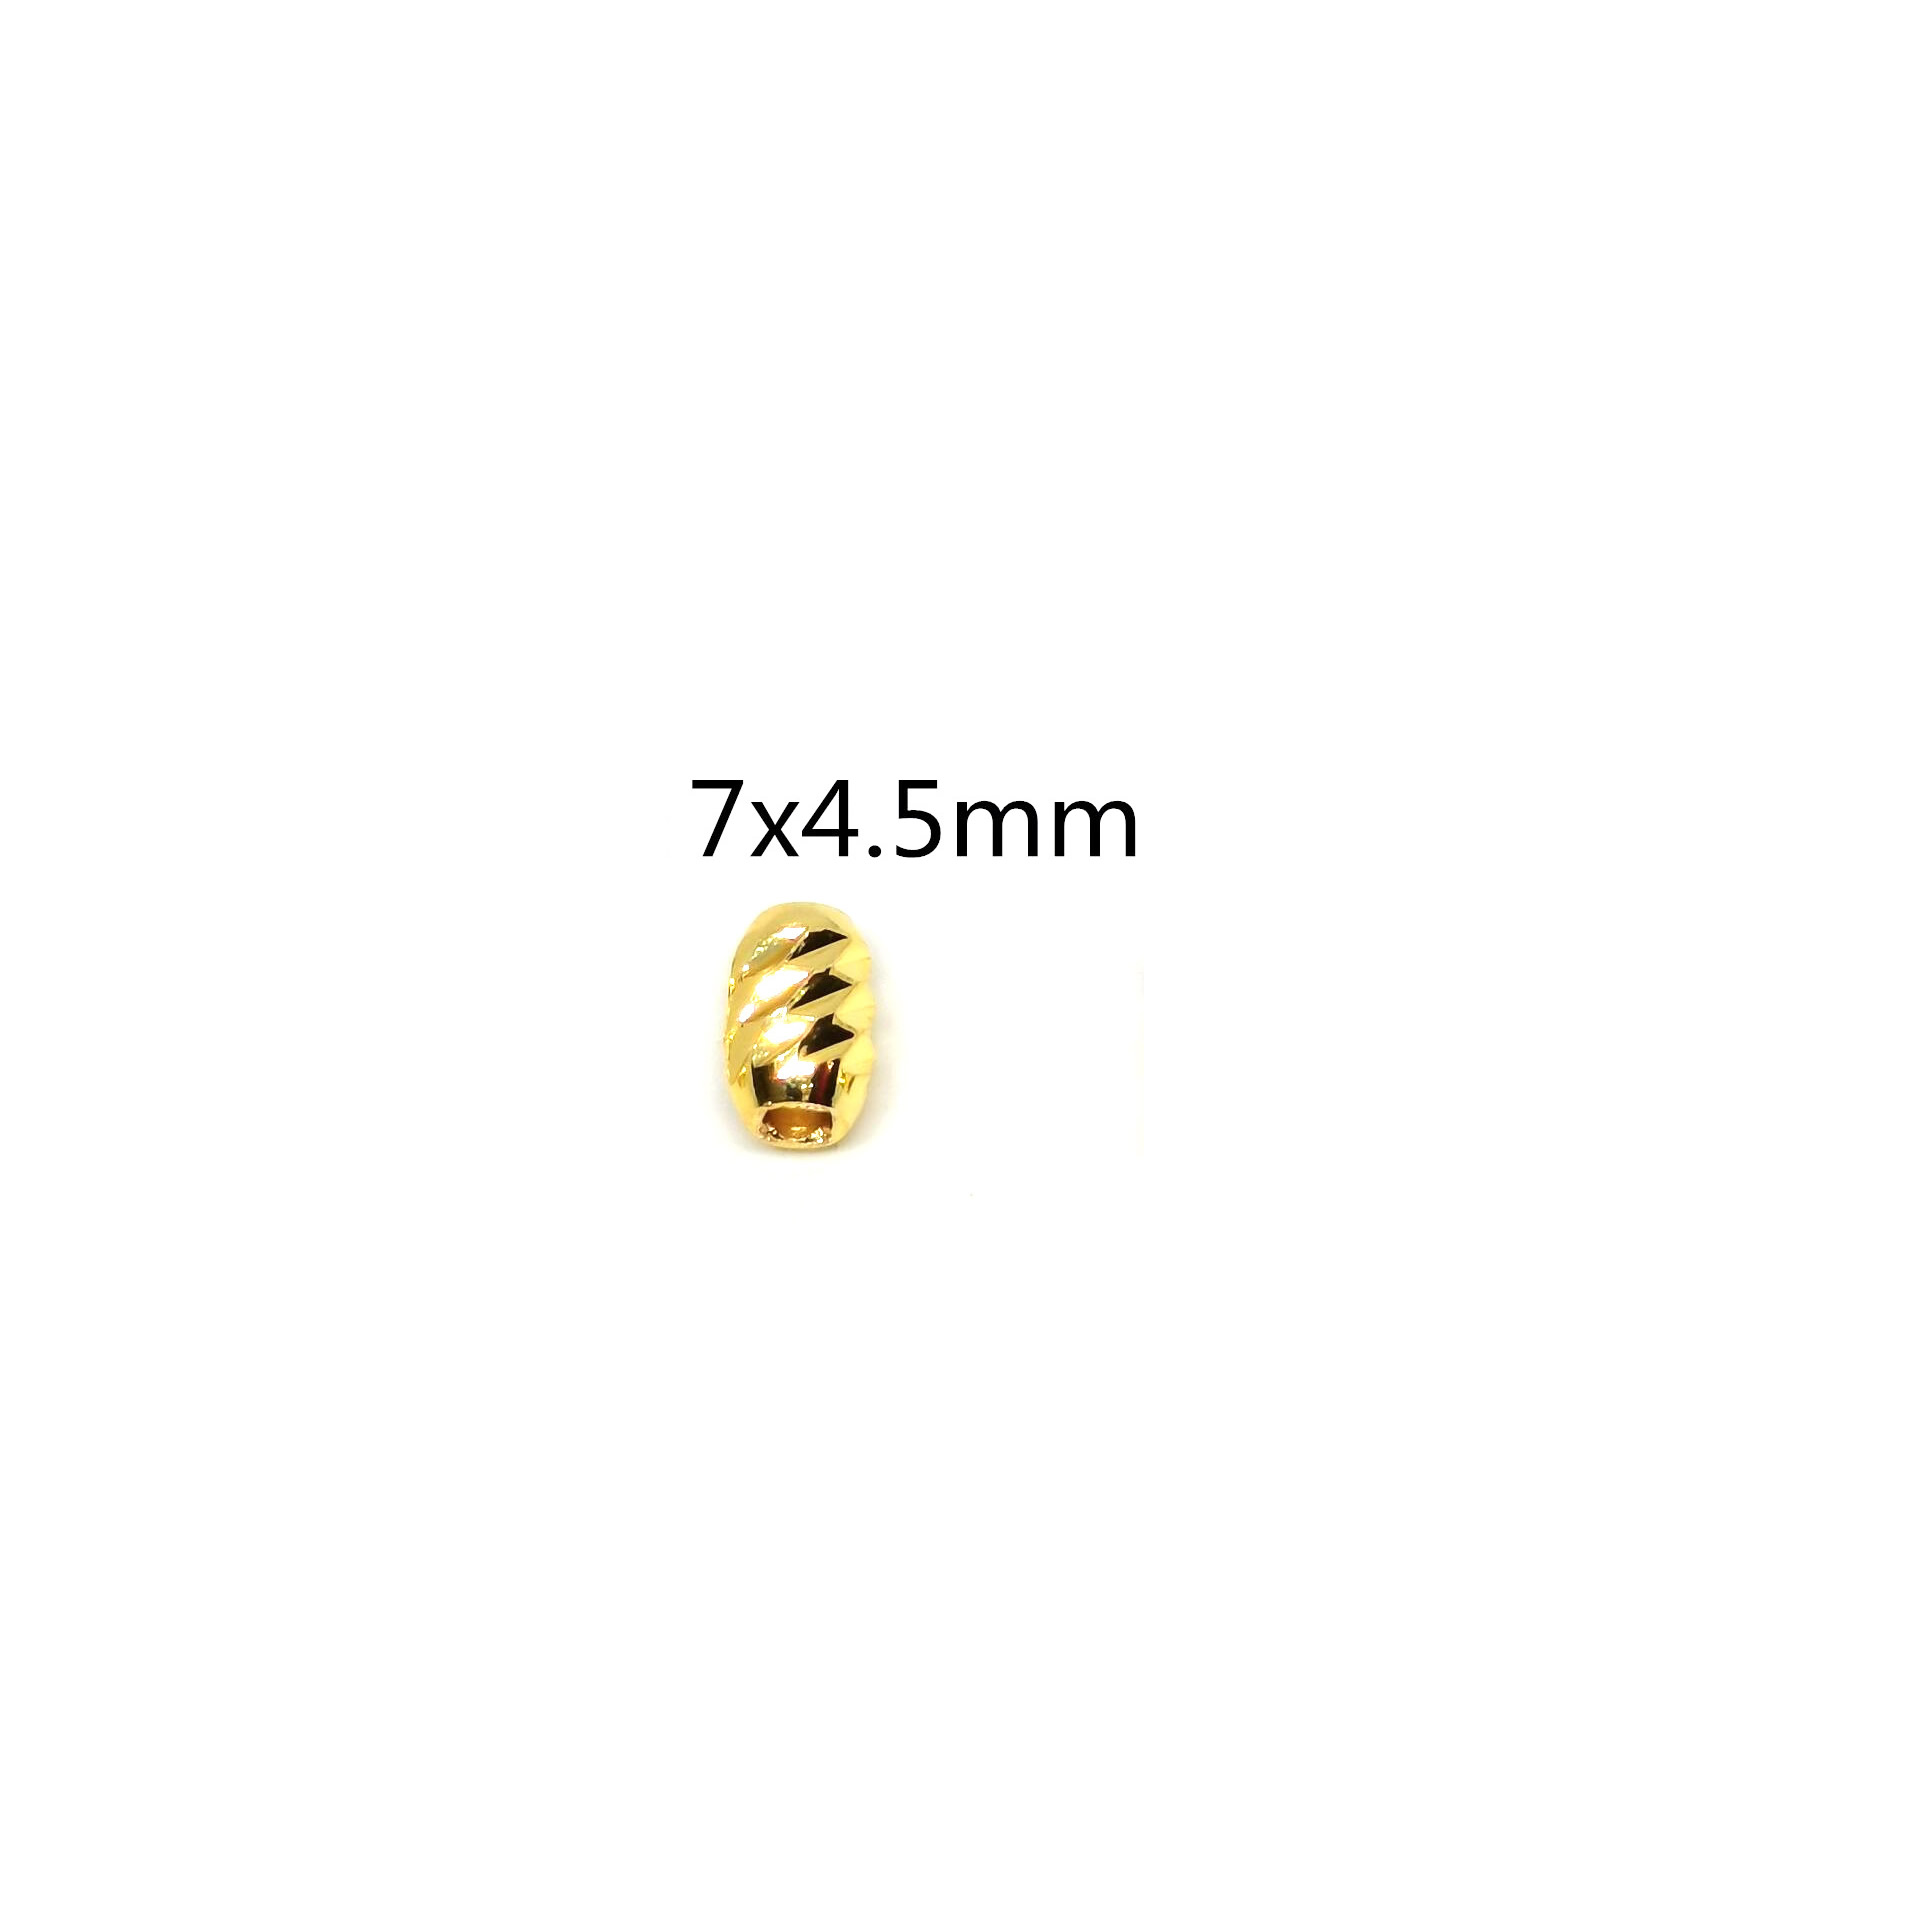 7x4.5mm